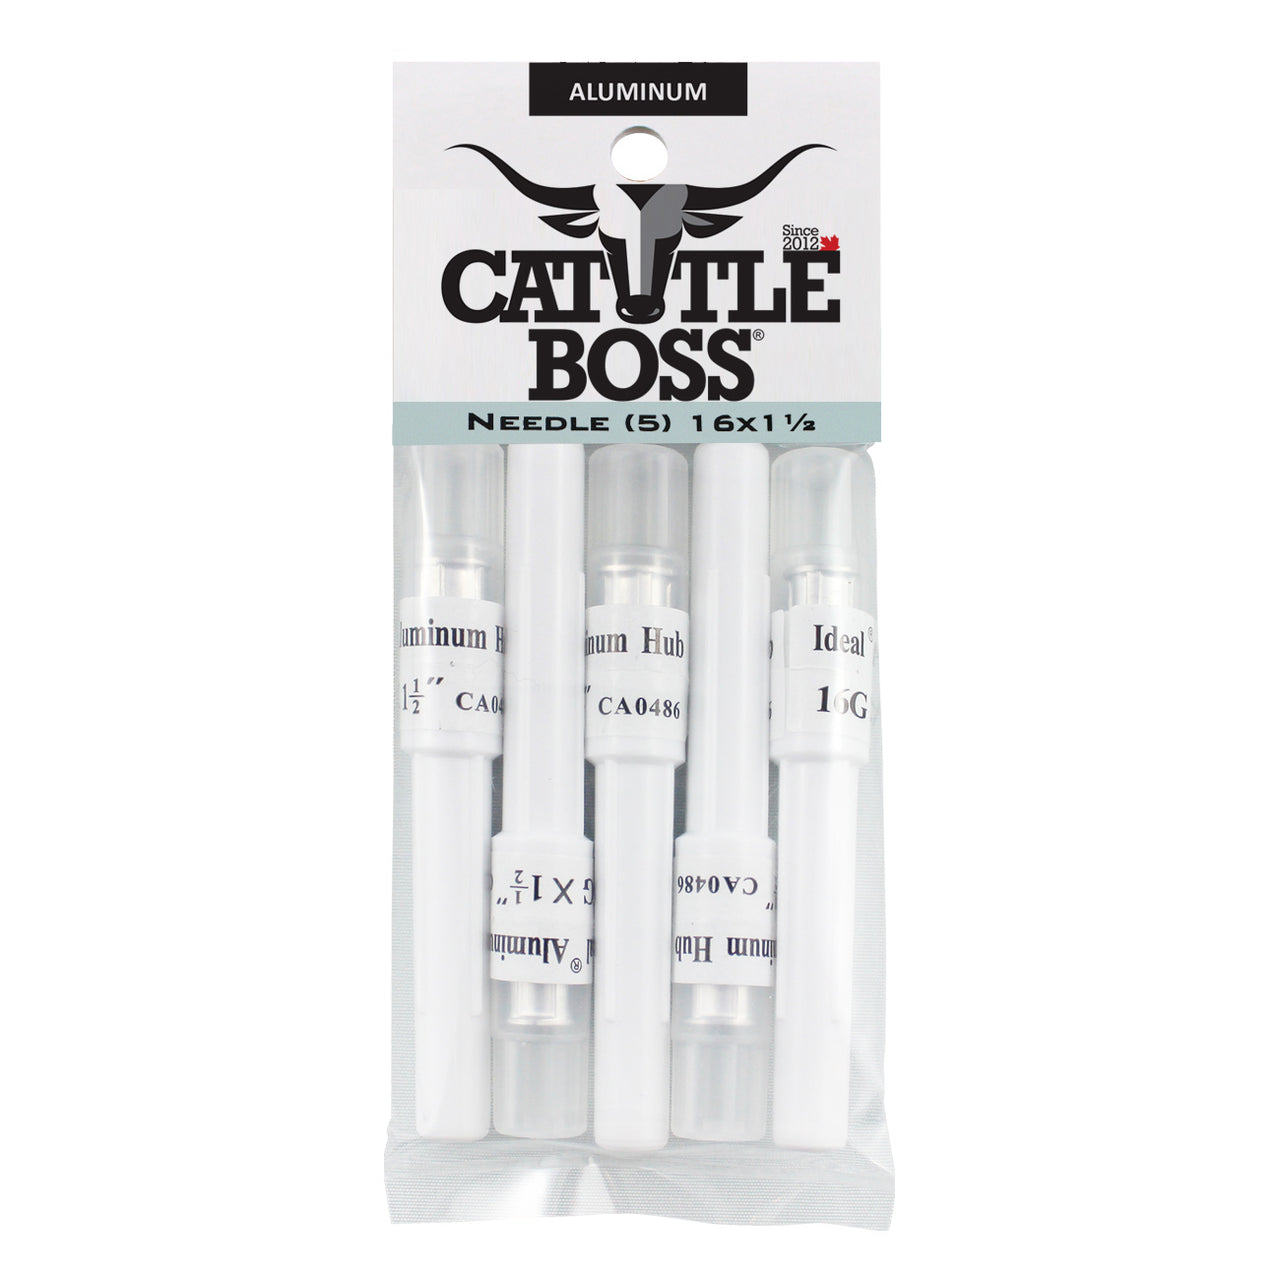 Cattle Boss Aluminum Hub Needle (5 Pack) 16 X 1 1/2 - Drug Administration Cattle Boss - Canada